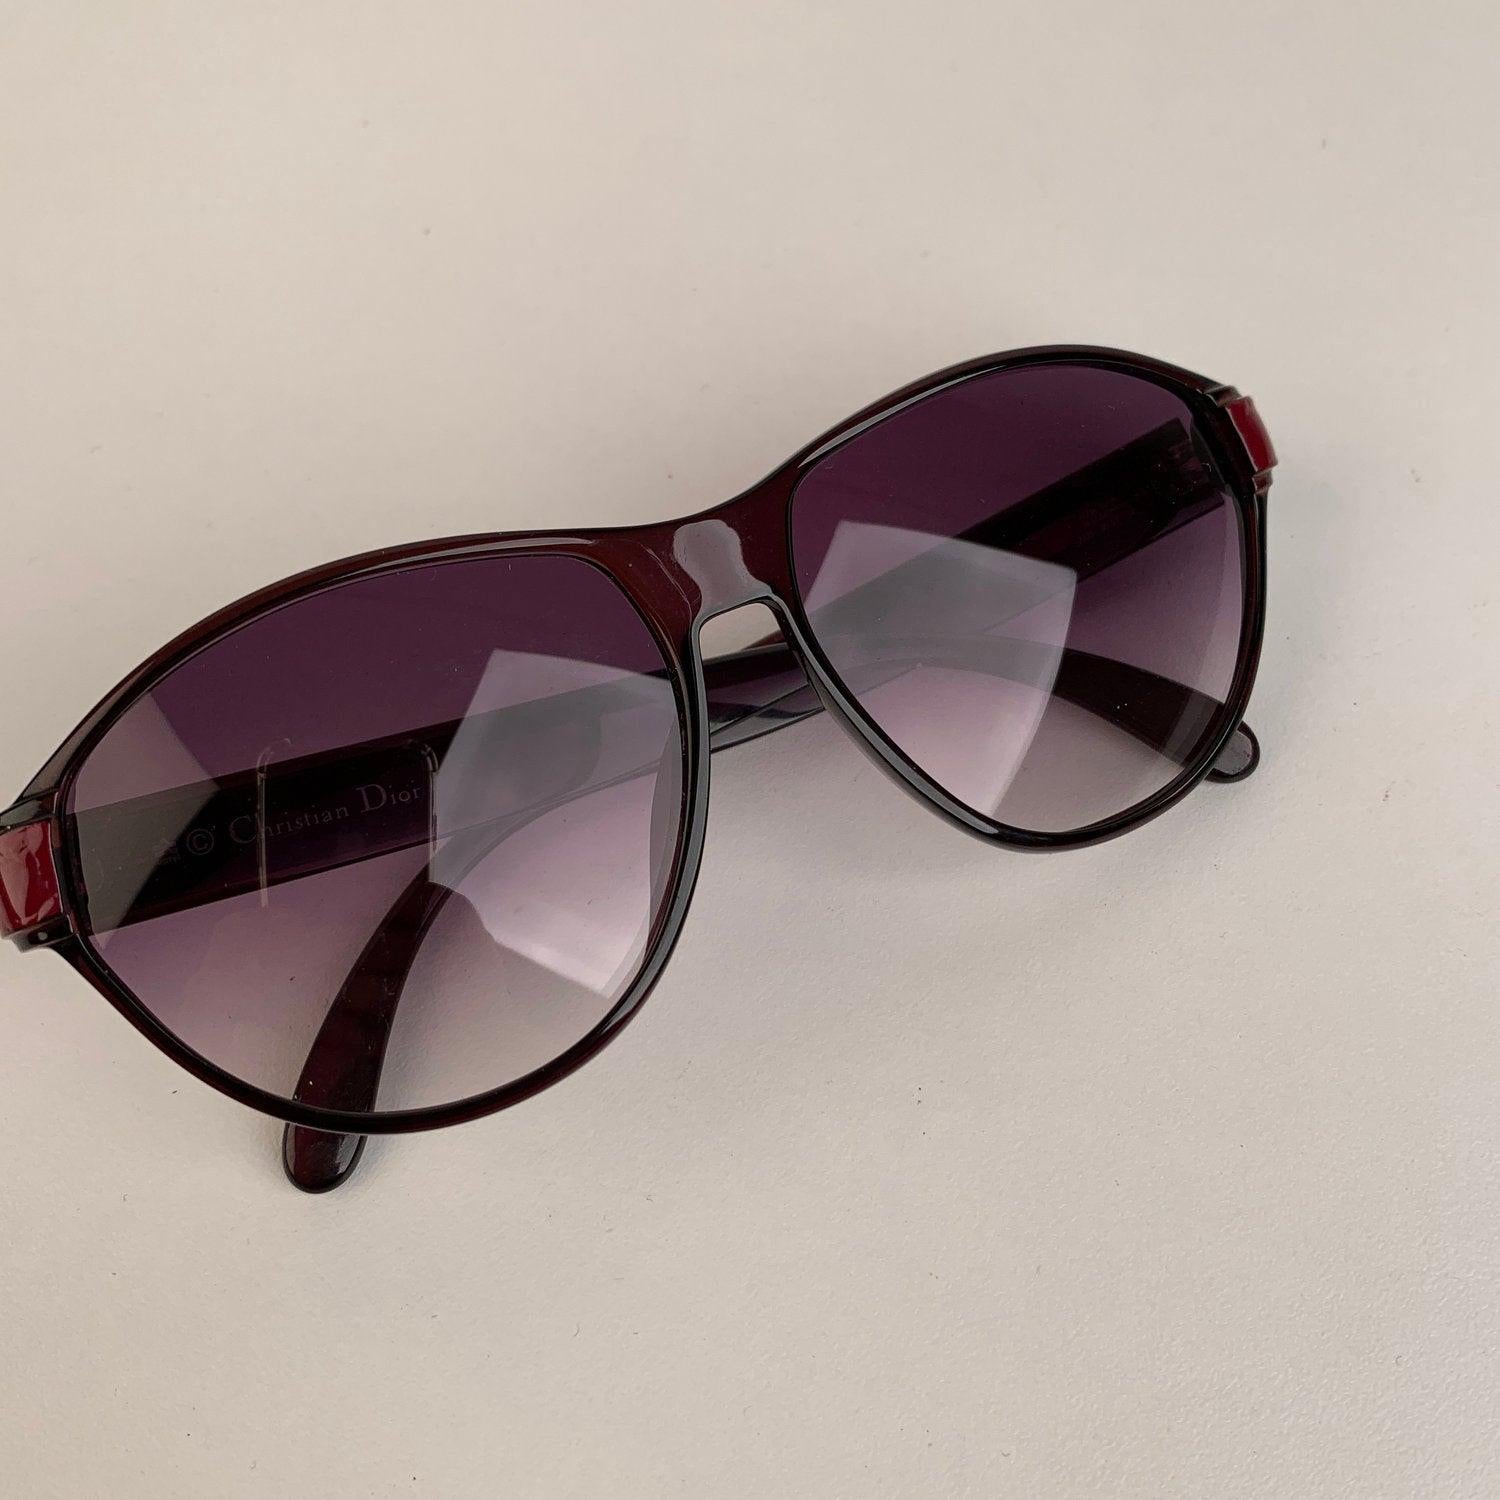 CHRISTIAN DIOR Vintage 1970s black and burgundy sunglasses. Gradient purple new lenses. Optyl frame, handmade in Germany. CD logo on temples. Mod. & Refs: 2325 - 80 - 57/12 Details MATERIAL: Plastic COLOR: Black MODEL: 2325 GENDER: Women COUNTRY OF